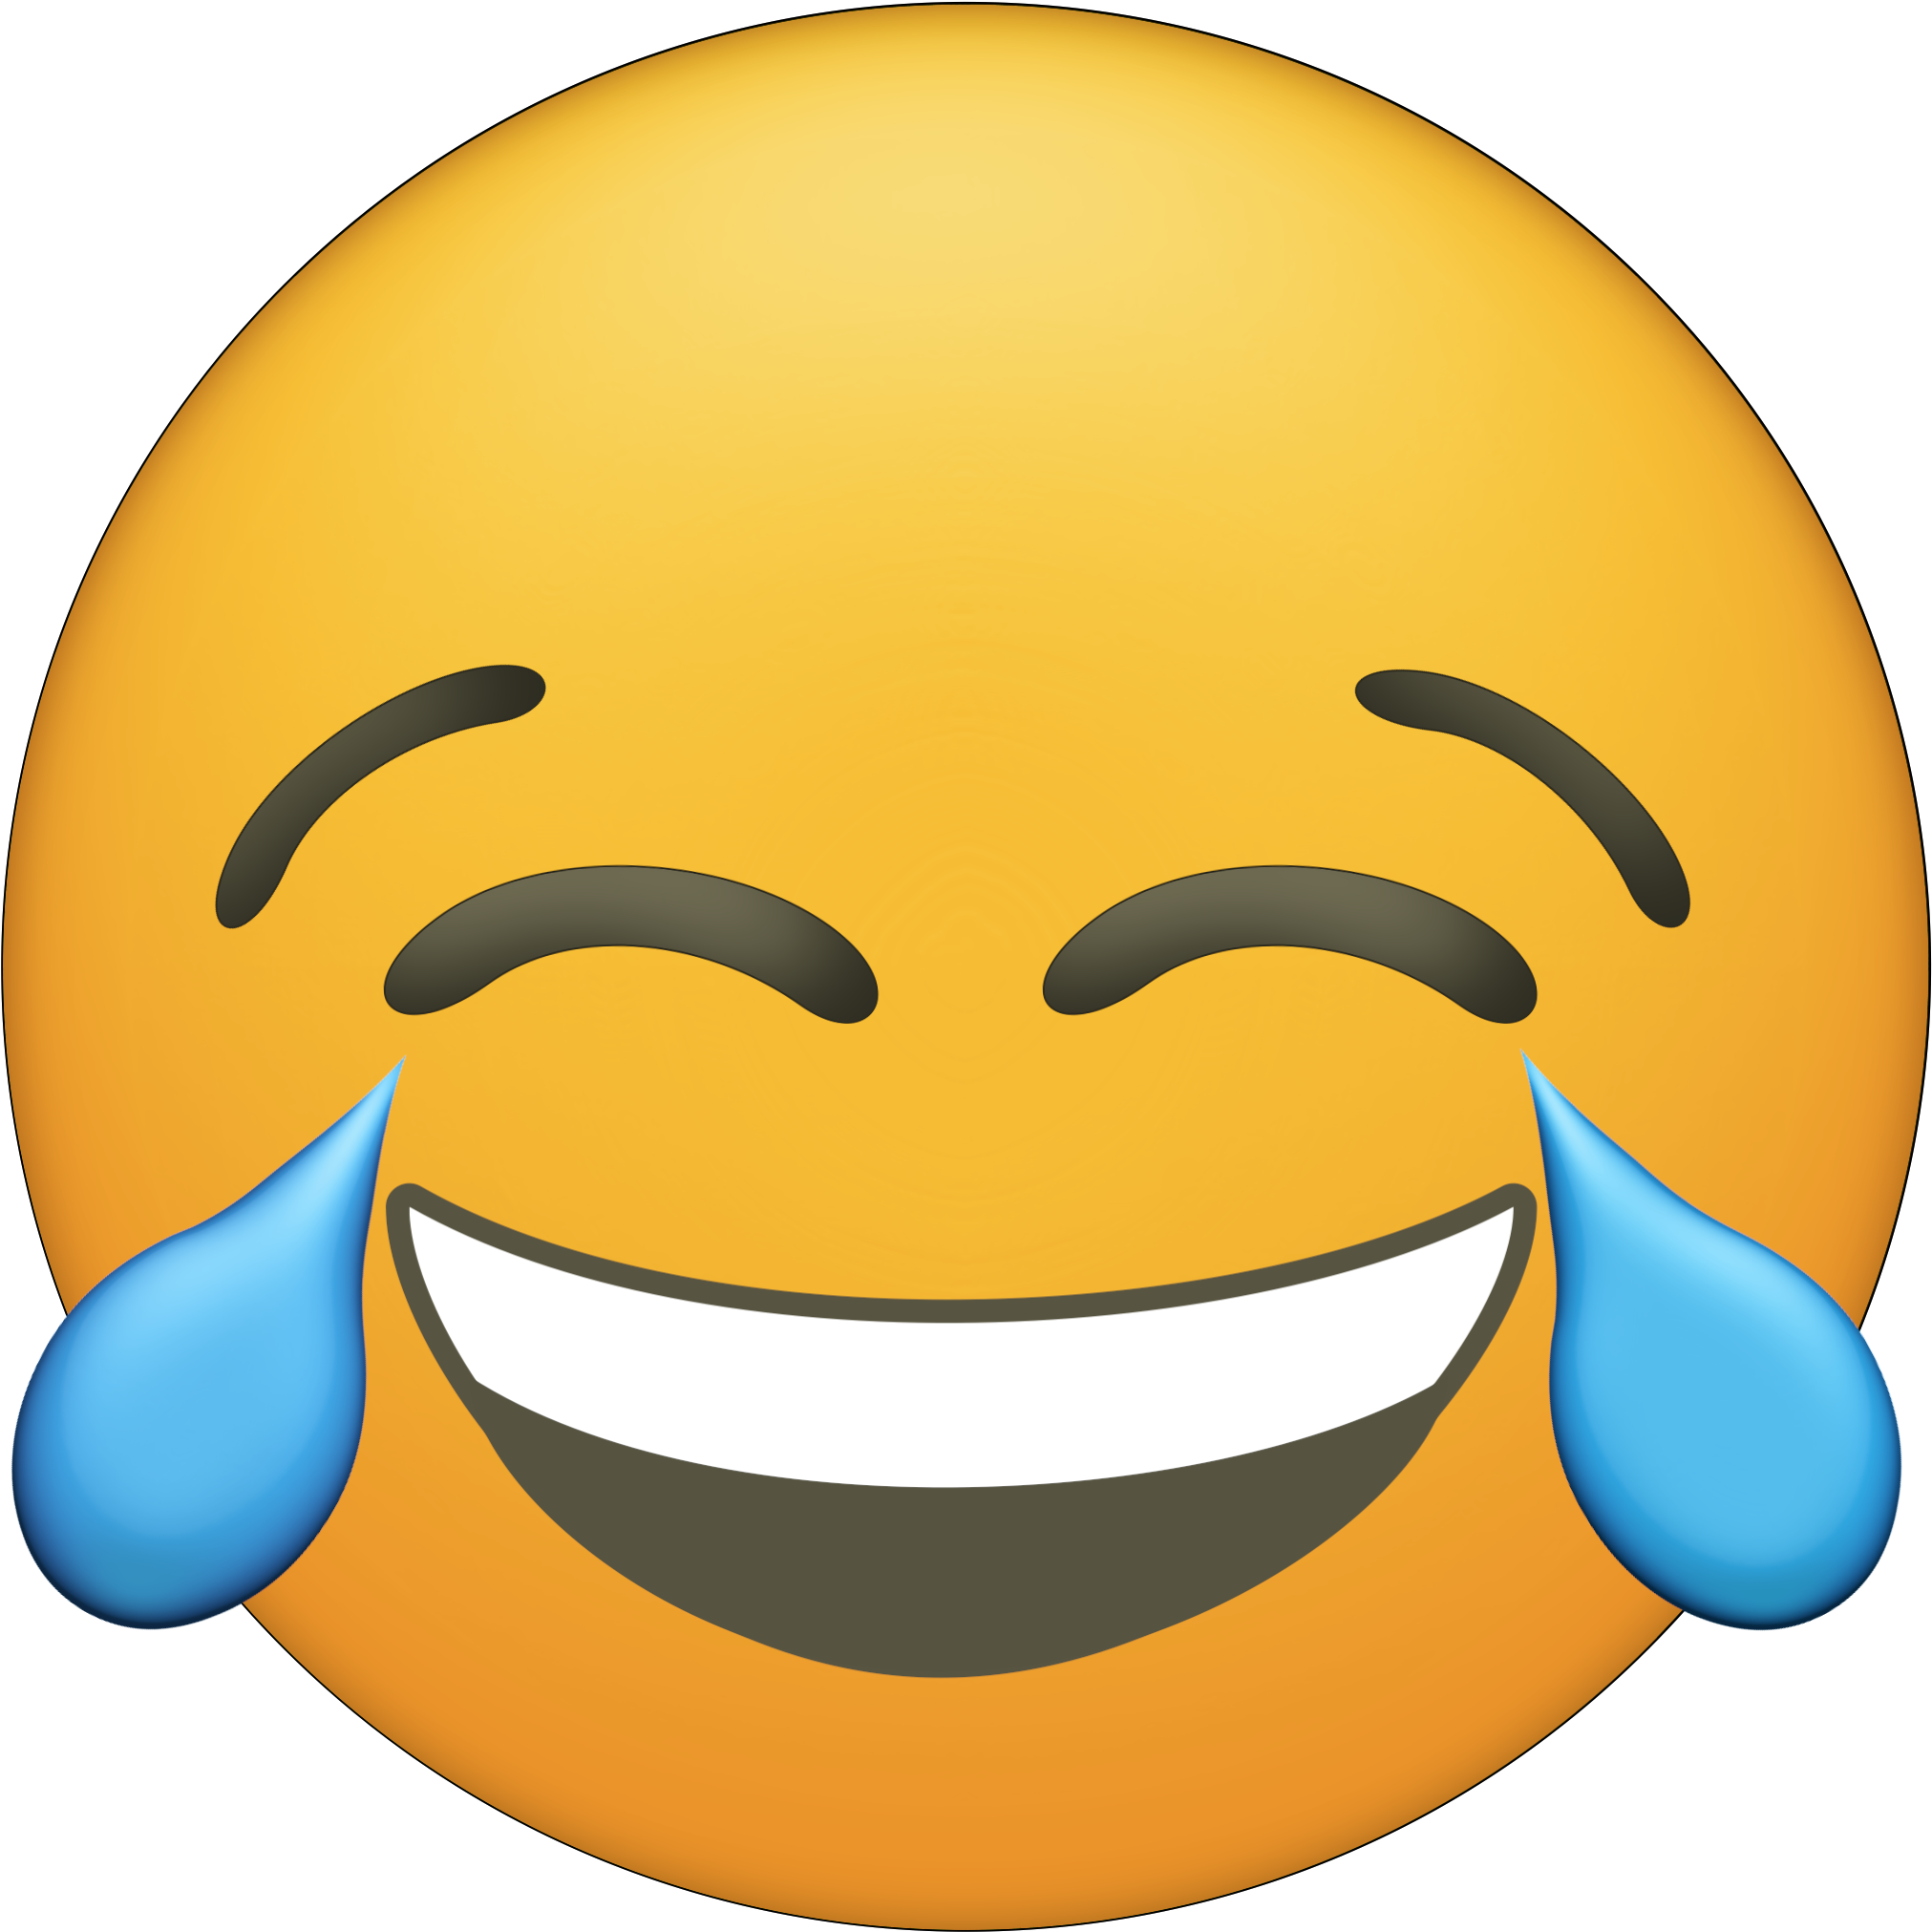 Laughing Crying Emoji PNG HD